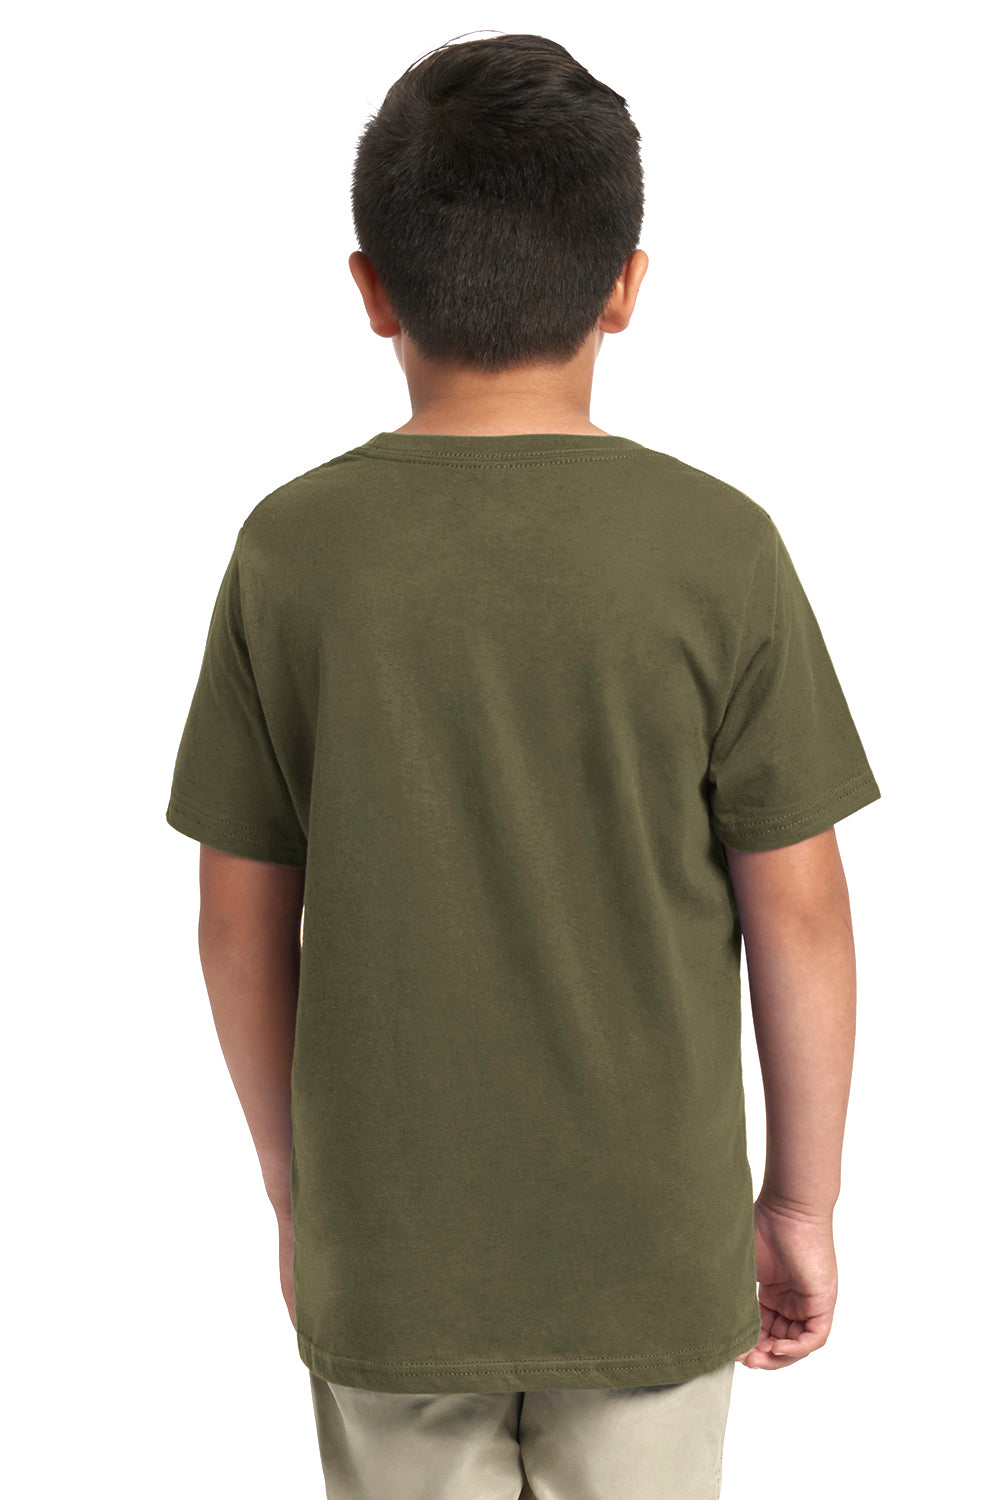 Next Level 3310 Fine Jersey Short Sleeve Crewneck T-Shirt Military Green Back